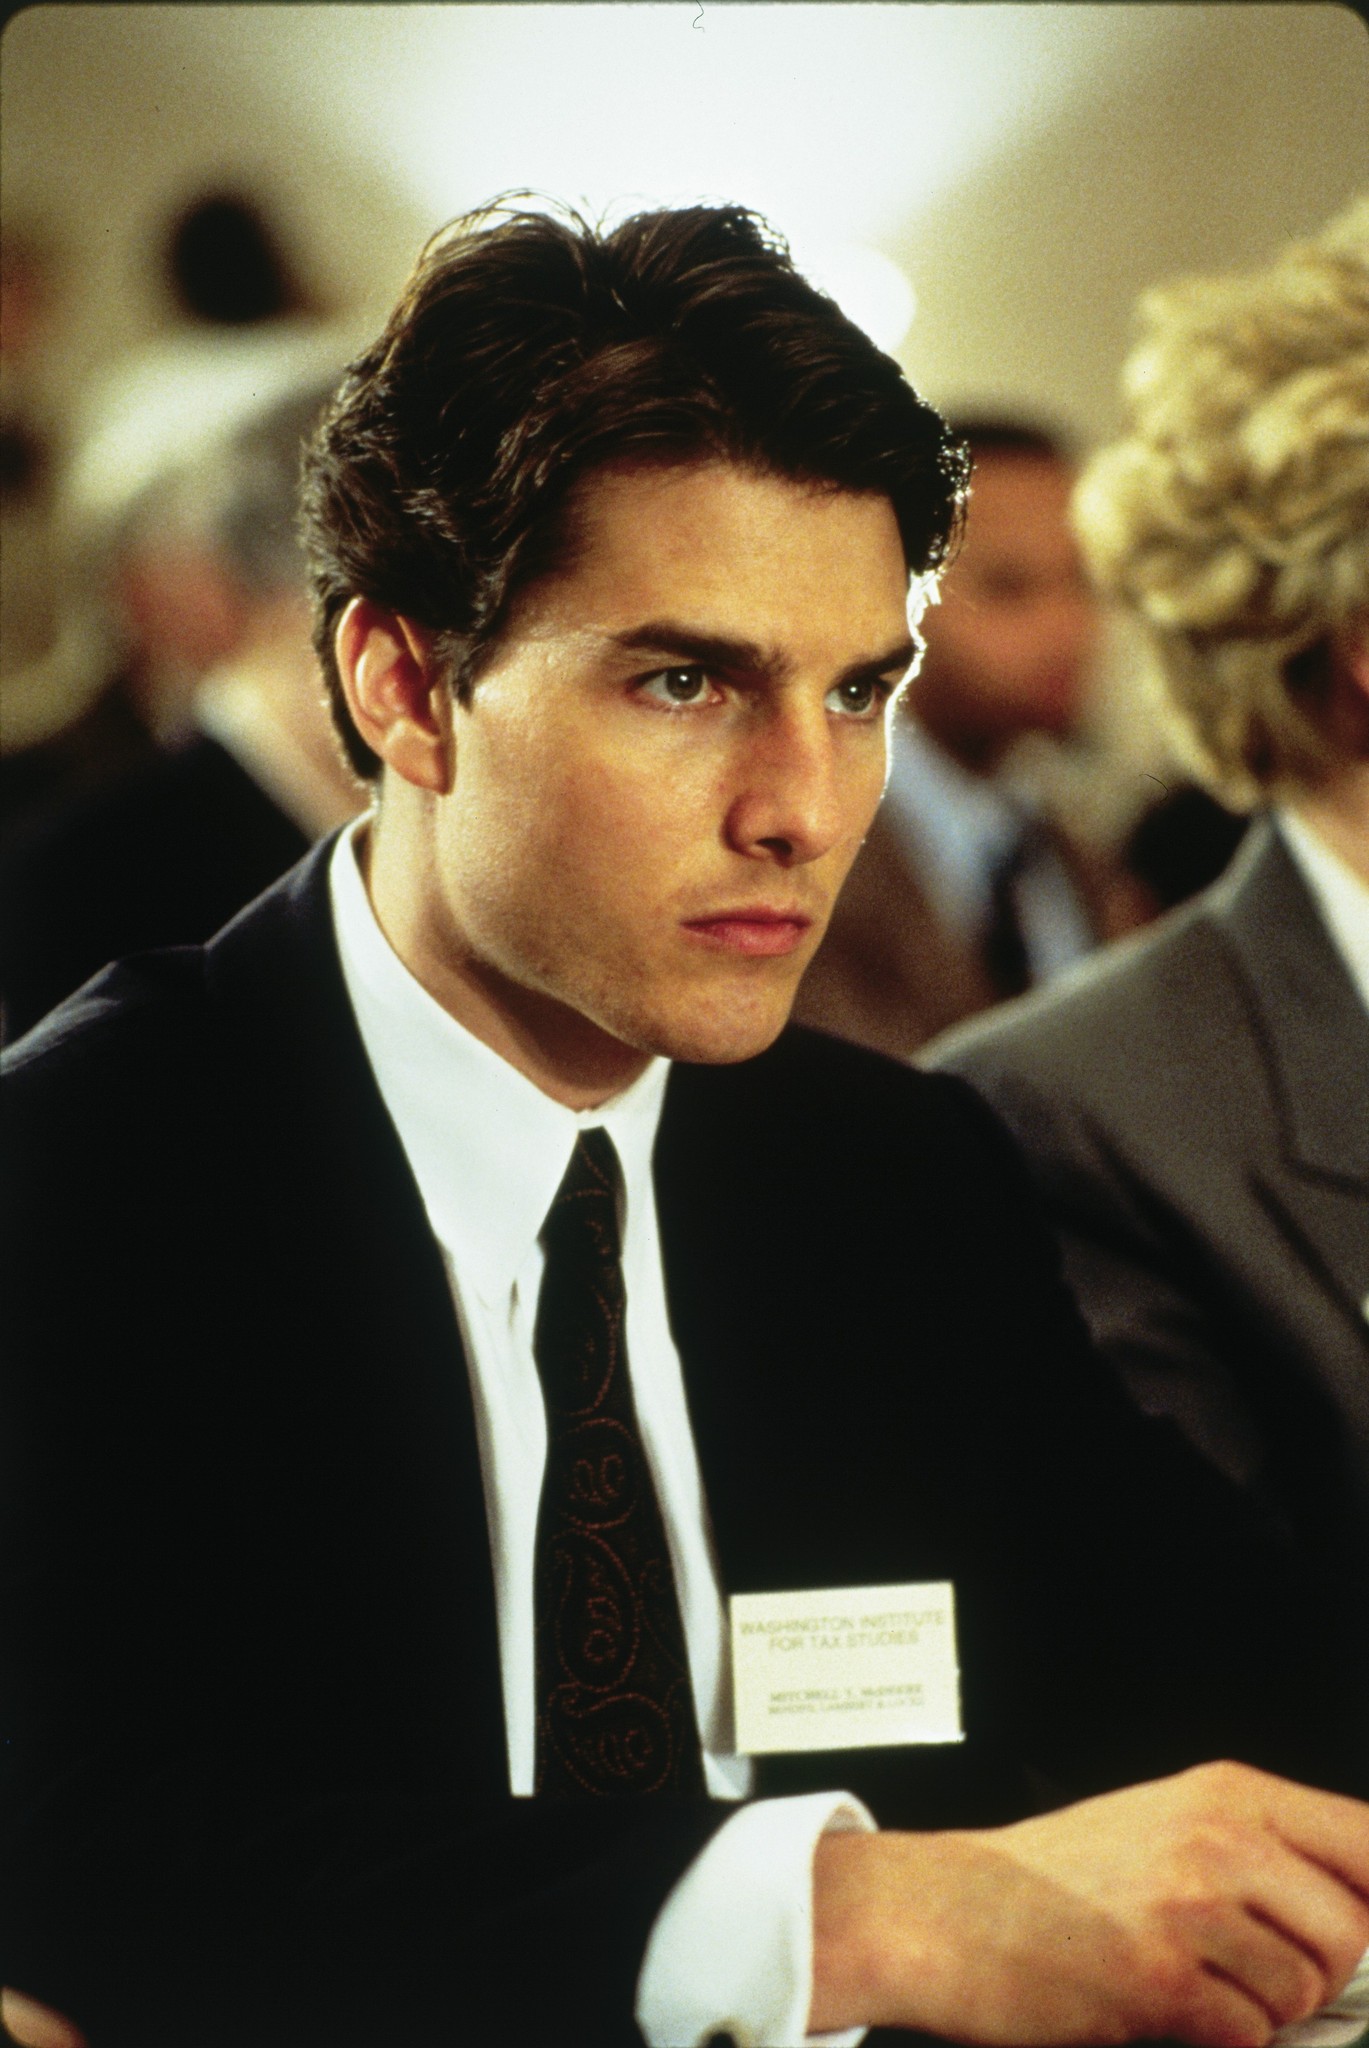 Still of Tom Cruise in Firma (1993)